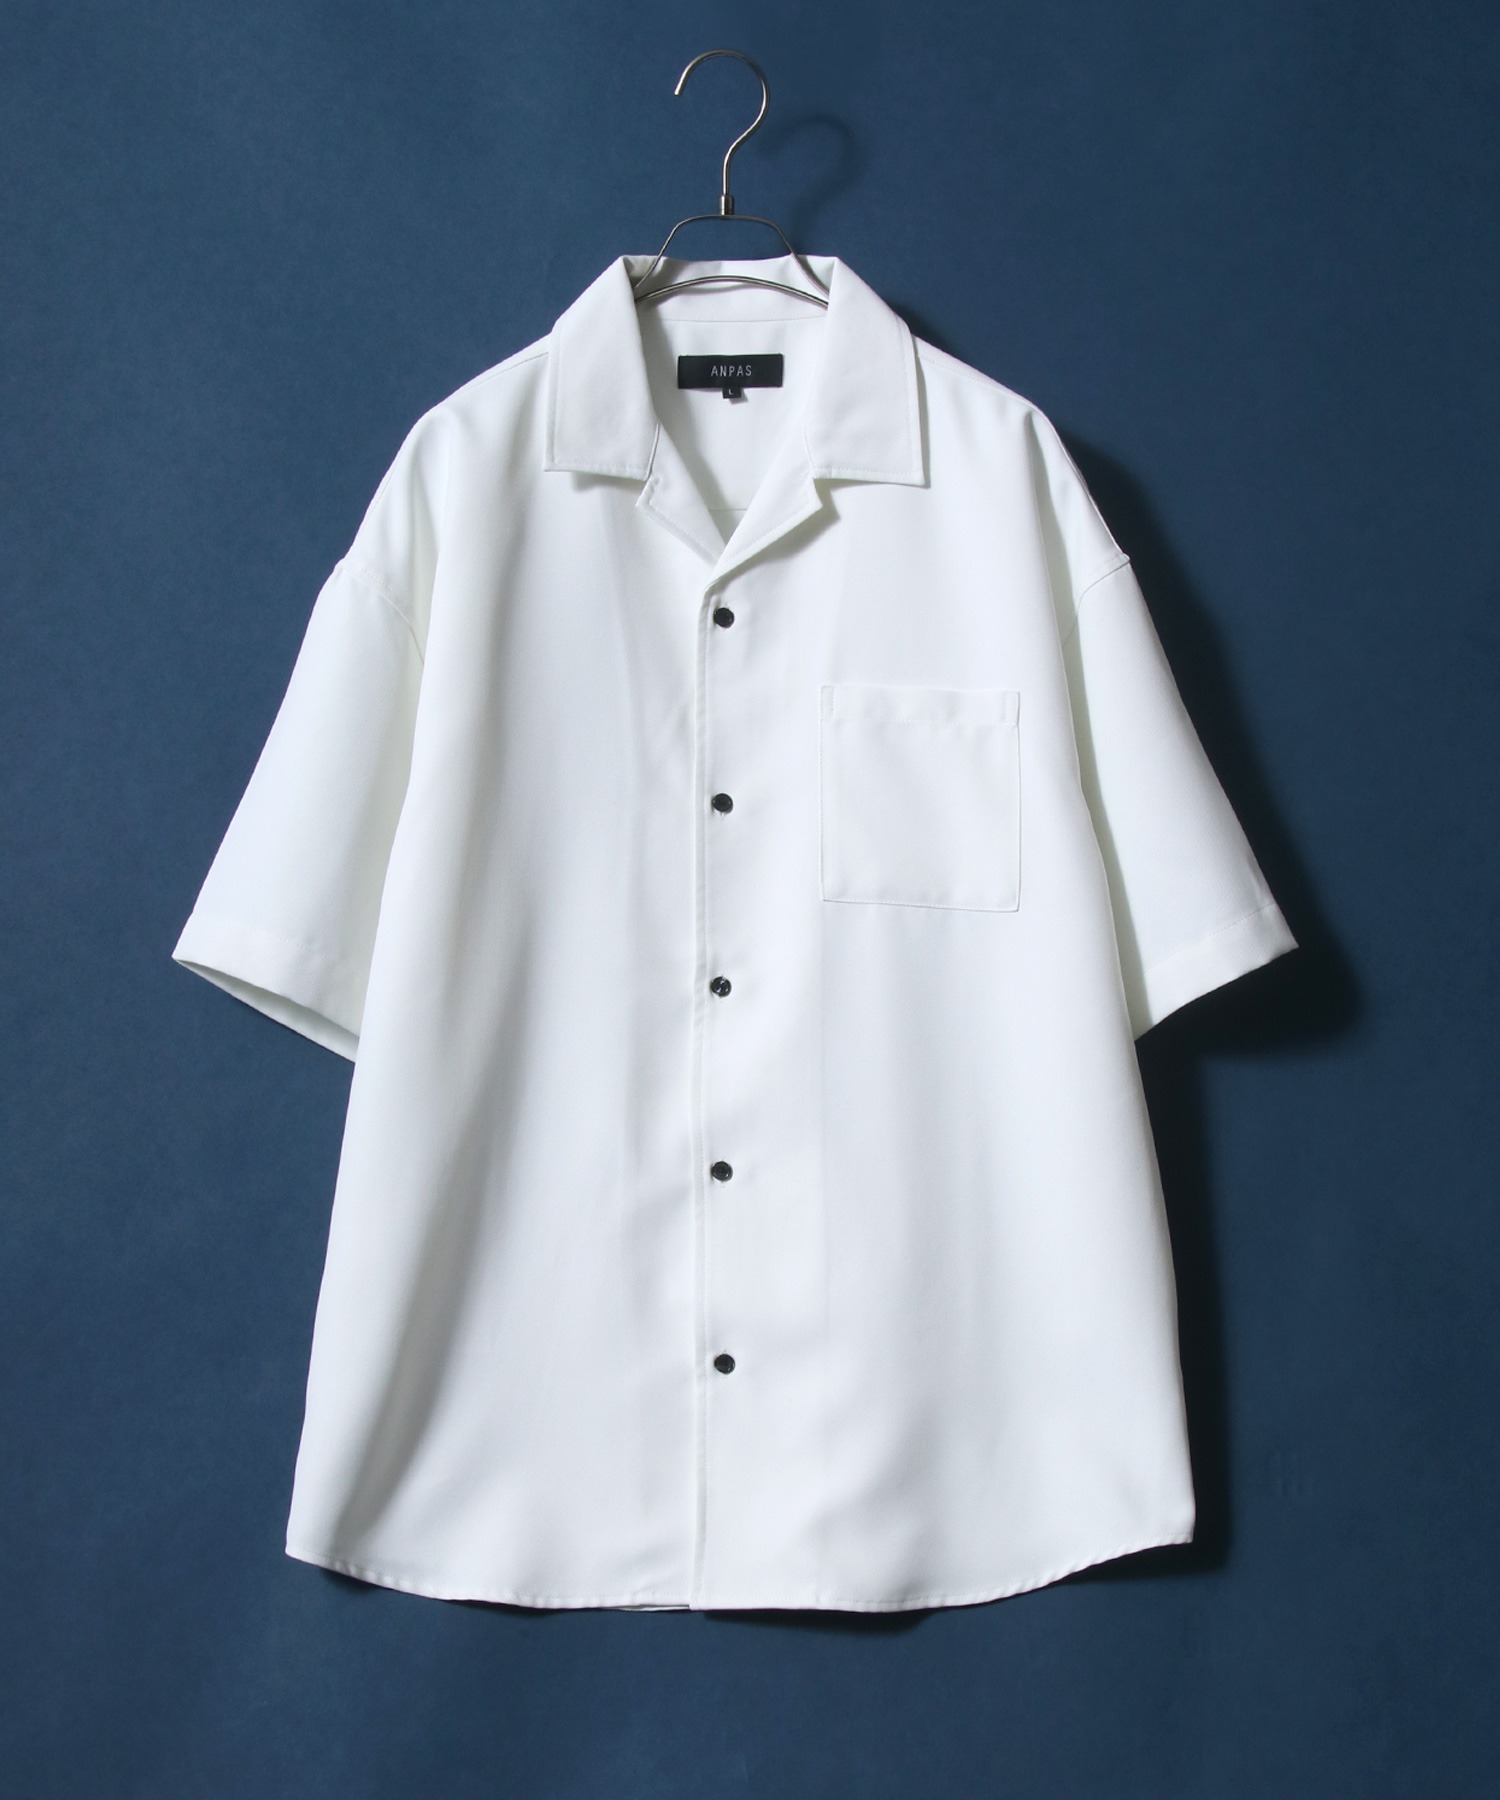 【ANPAS】ツイル オーバーサイズ オープンカラーシャツ/メンズ シャツ 半袖 開襟シャツ 無地